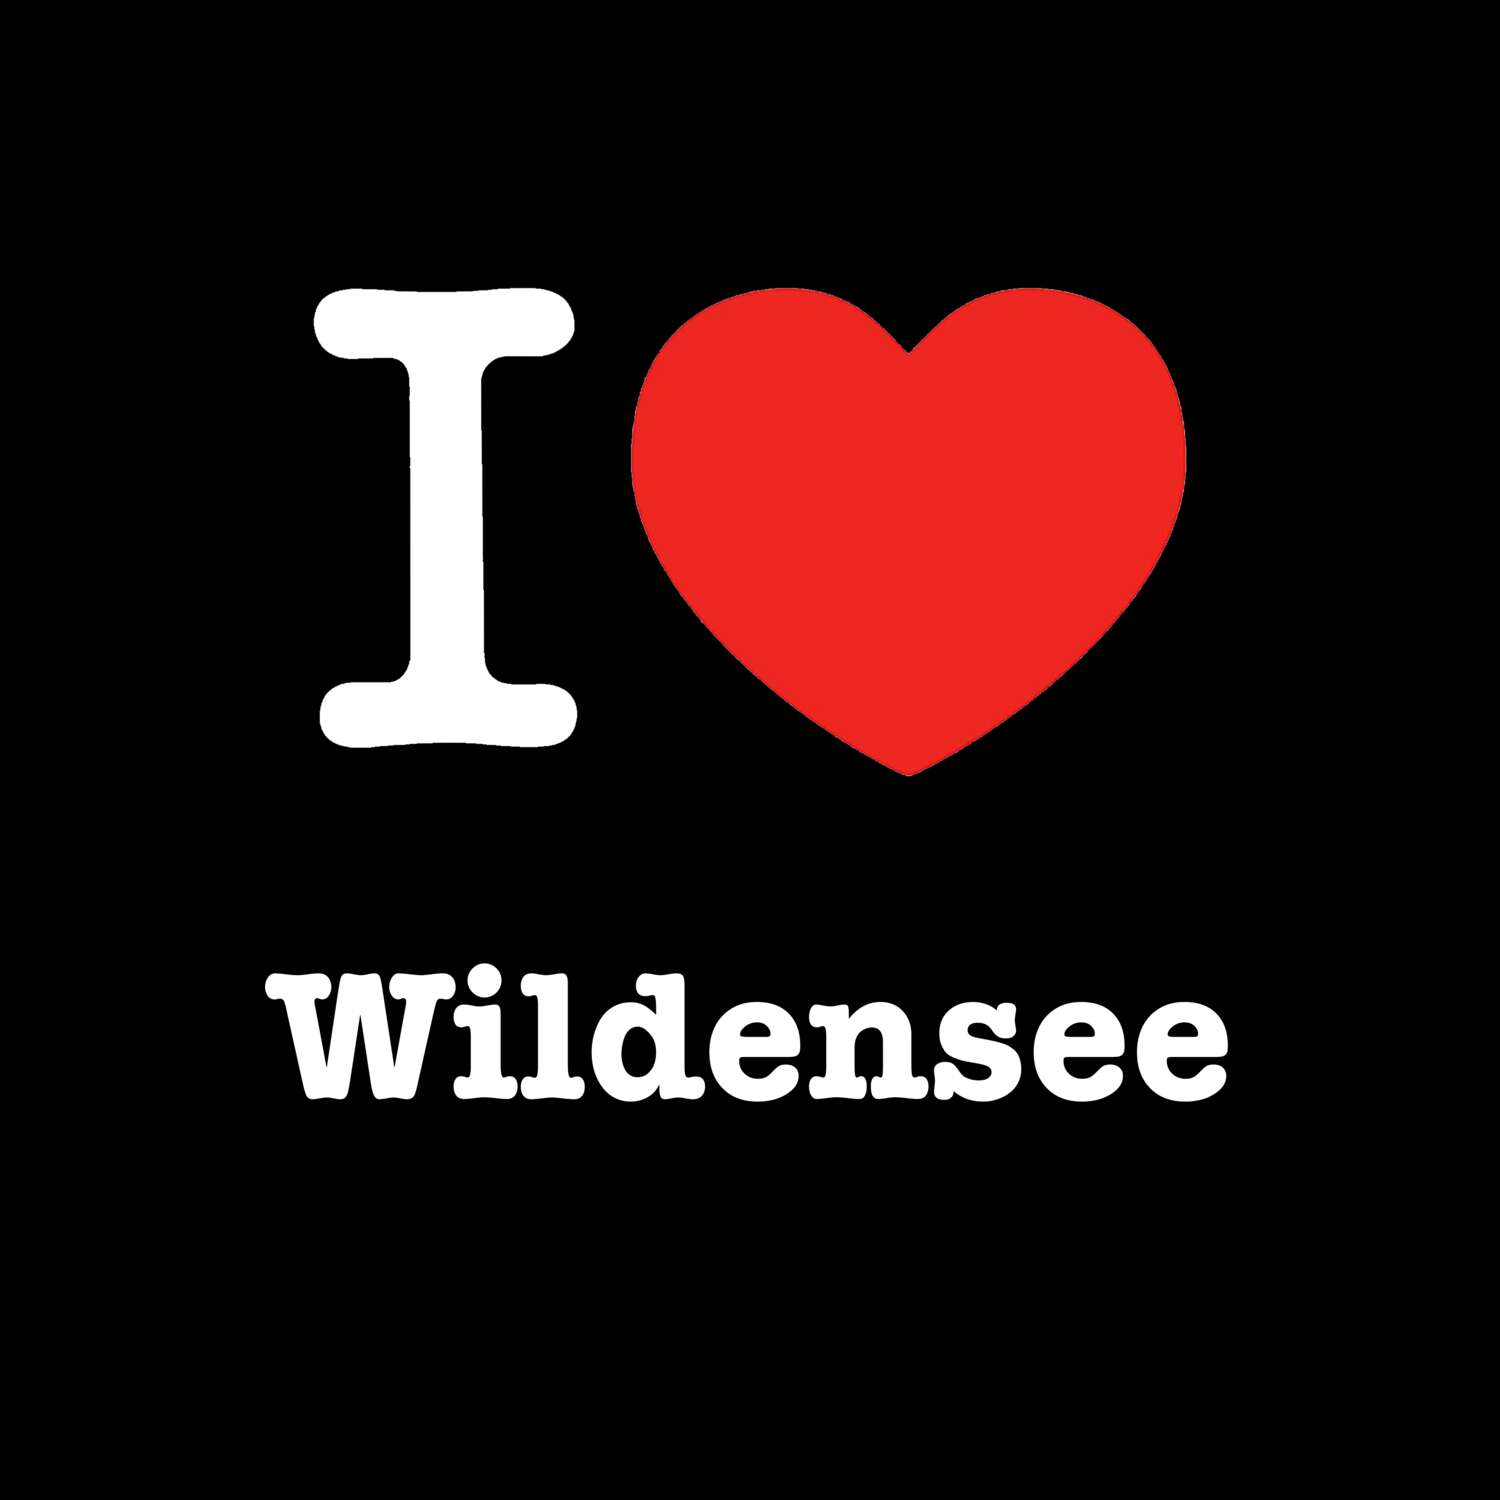 Wildensee T-Shirt »I love«